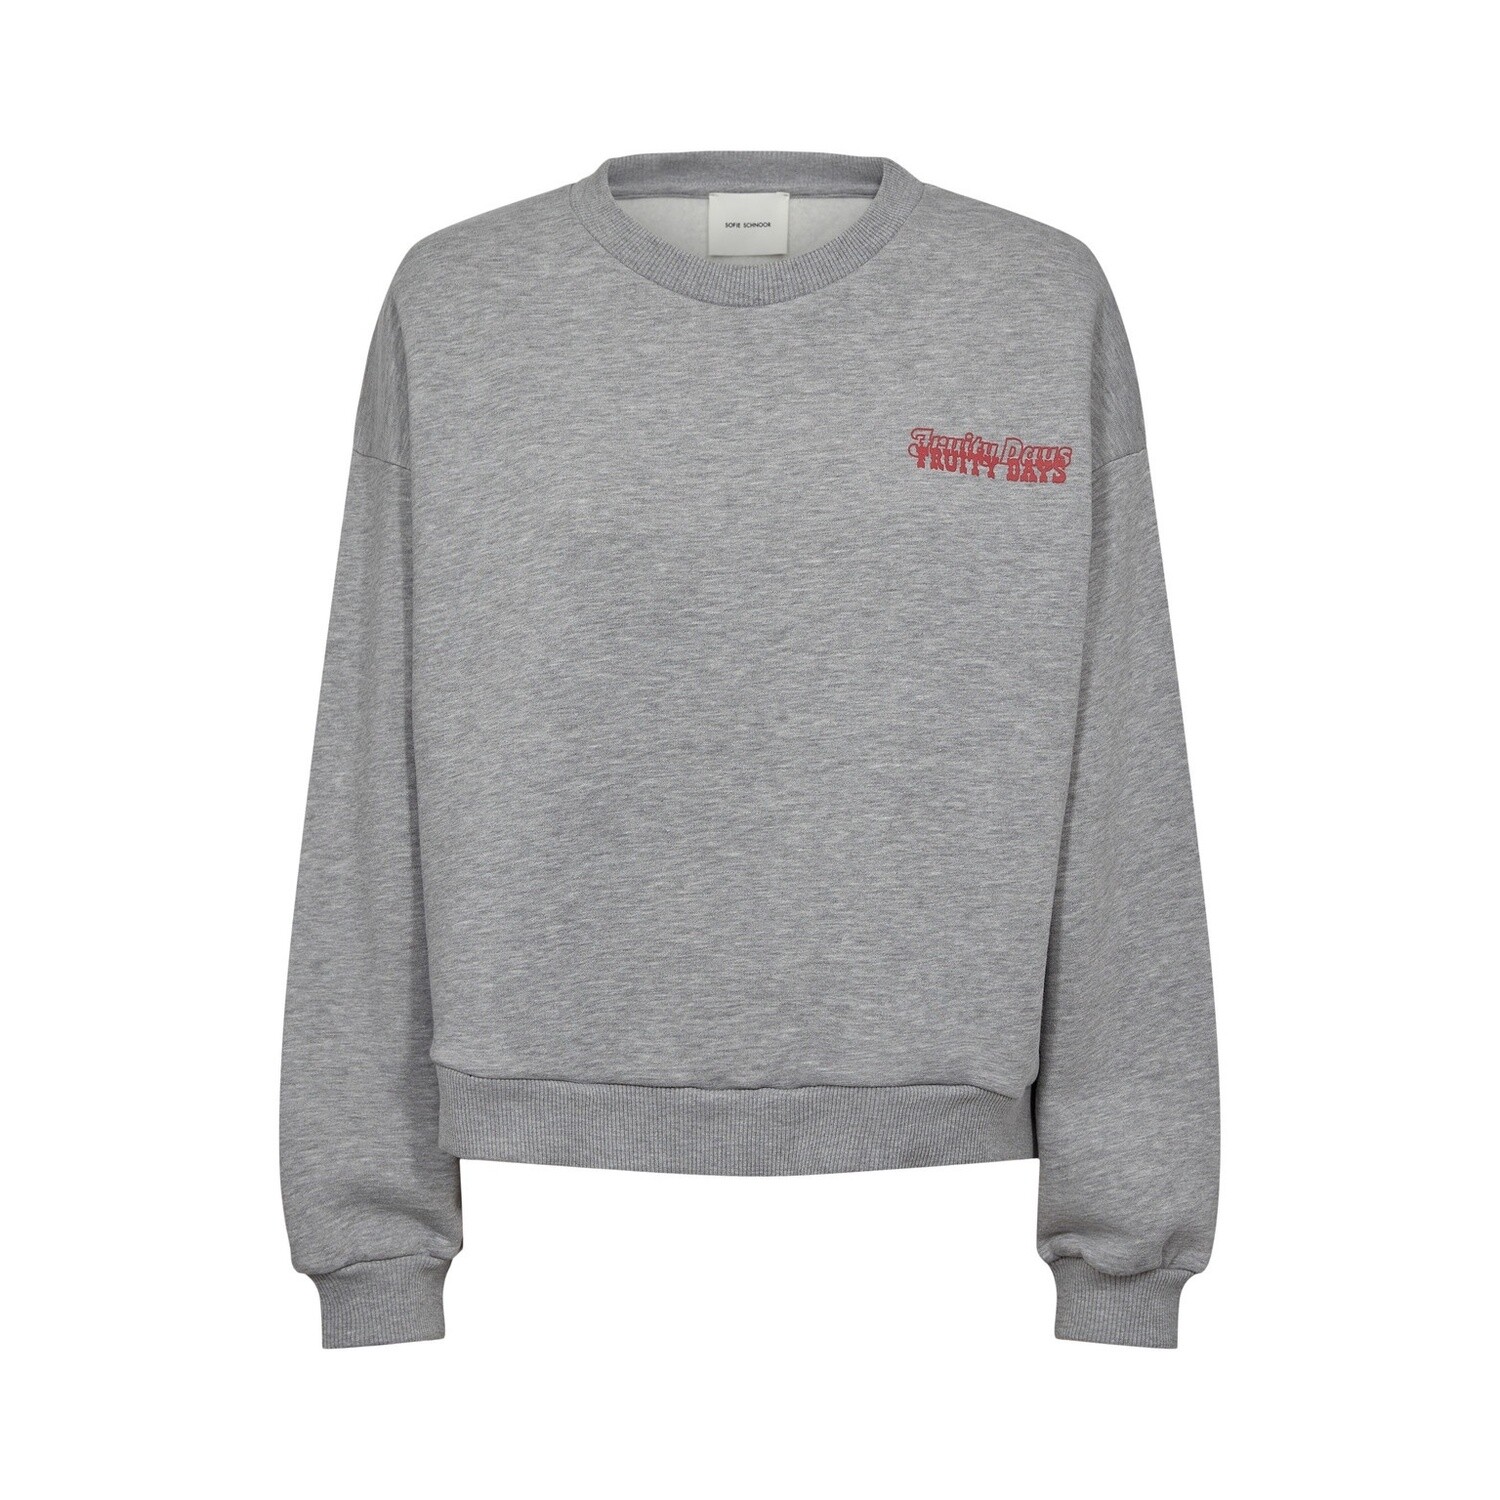 Fruity Days Sweatshirt, Colour: Grey Melange, Size: Small